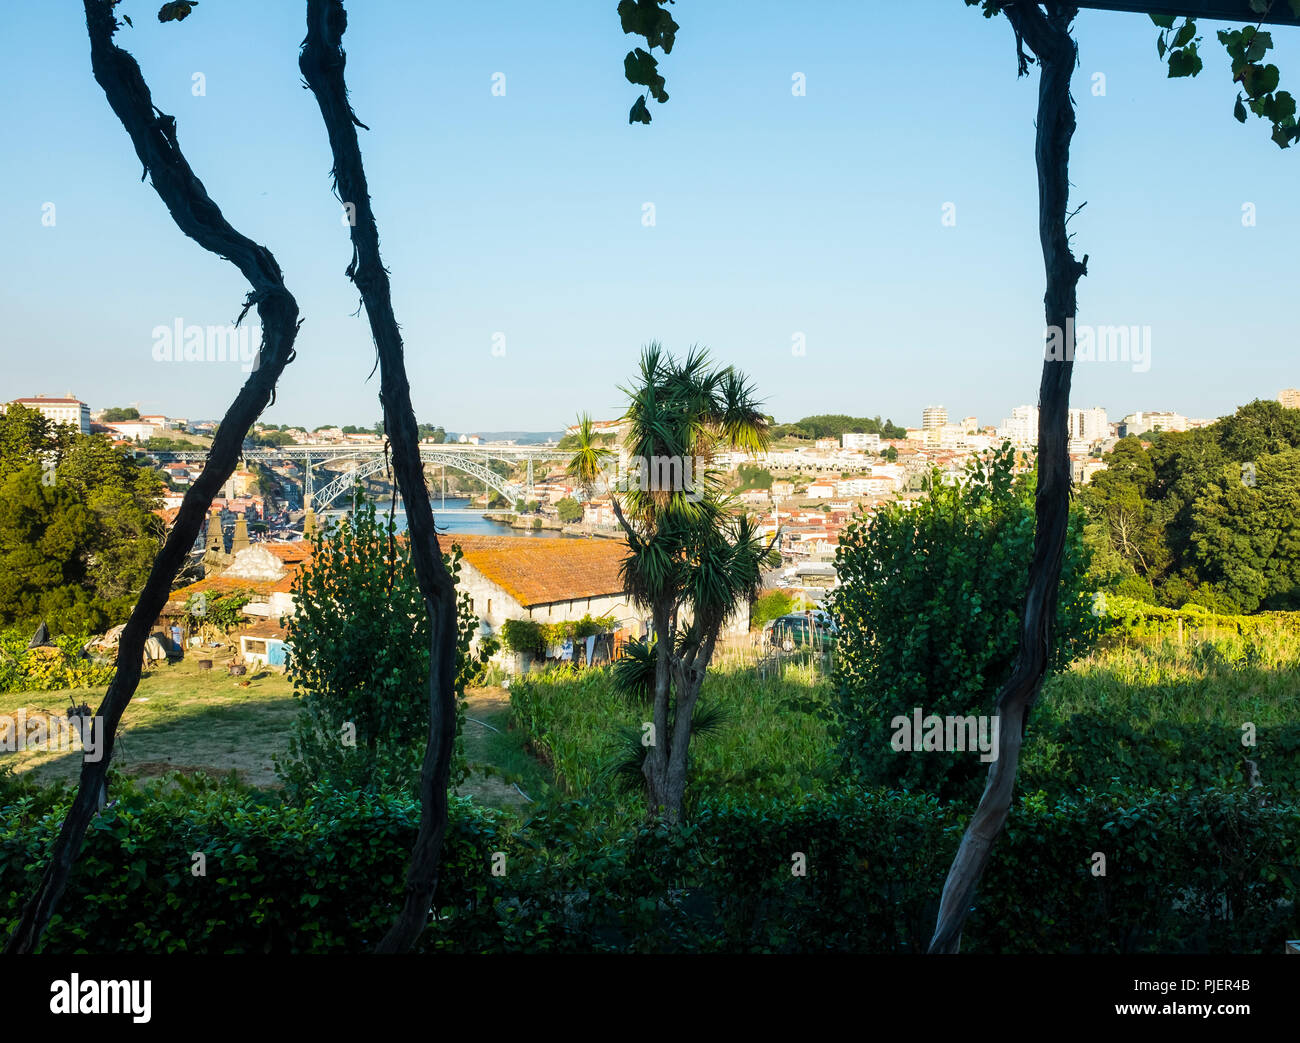 View from Vinum, the restaurant and wine bar at Graham's Port Lodge, Vila Nova de Gaia, Porto, Portugal. Stock Photo